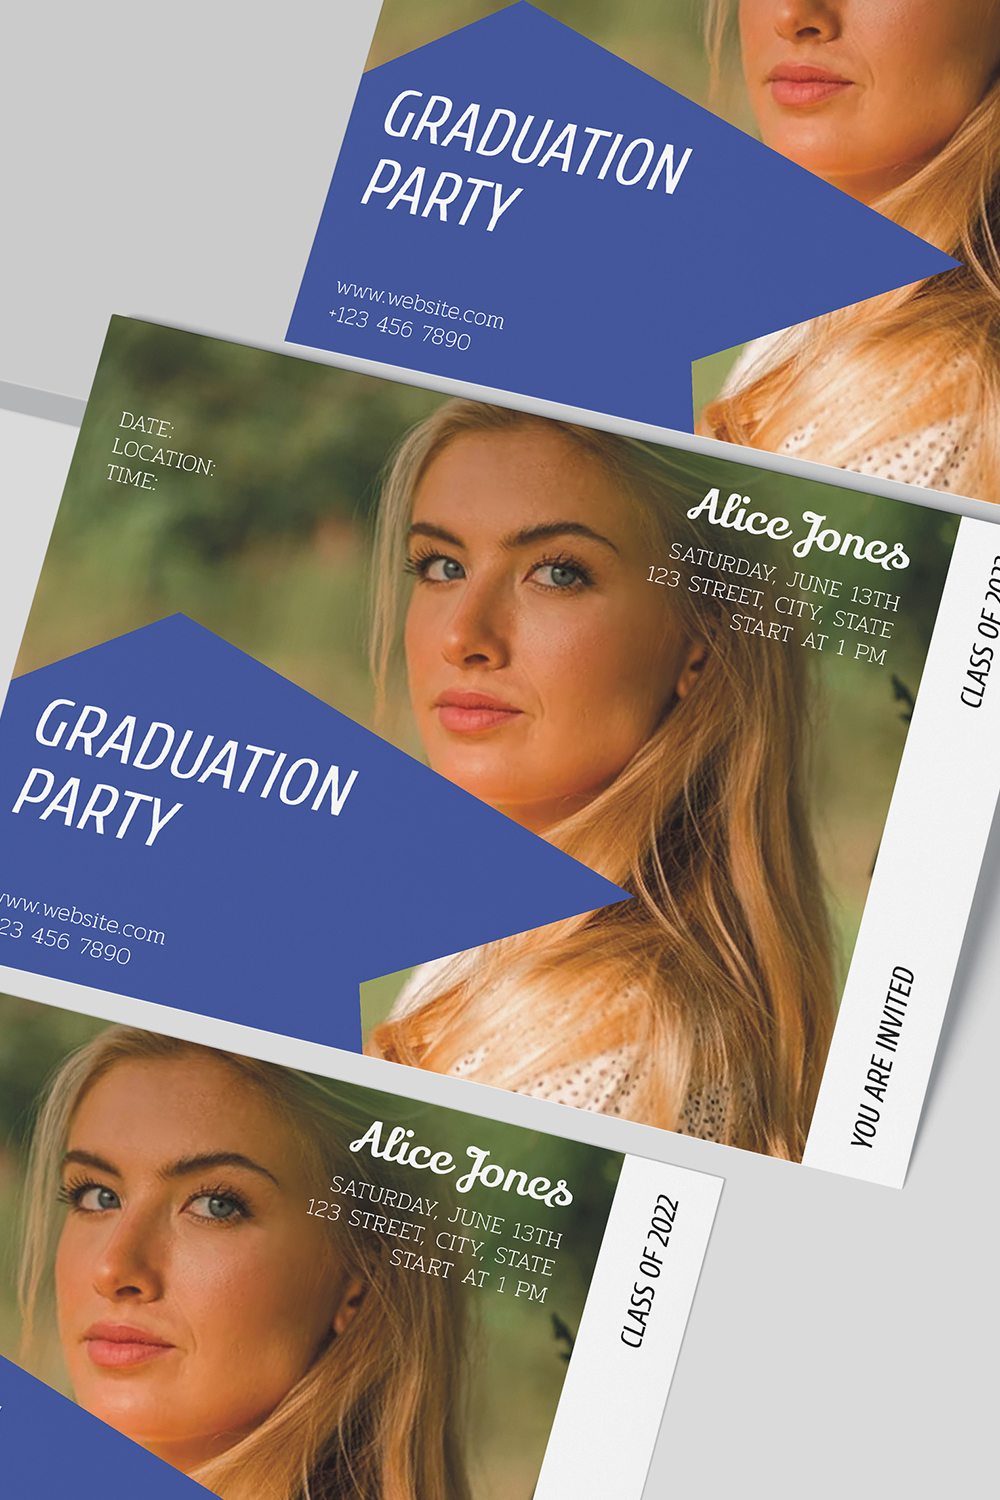 Graduation invitations with a girl and blue geometric shape.